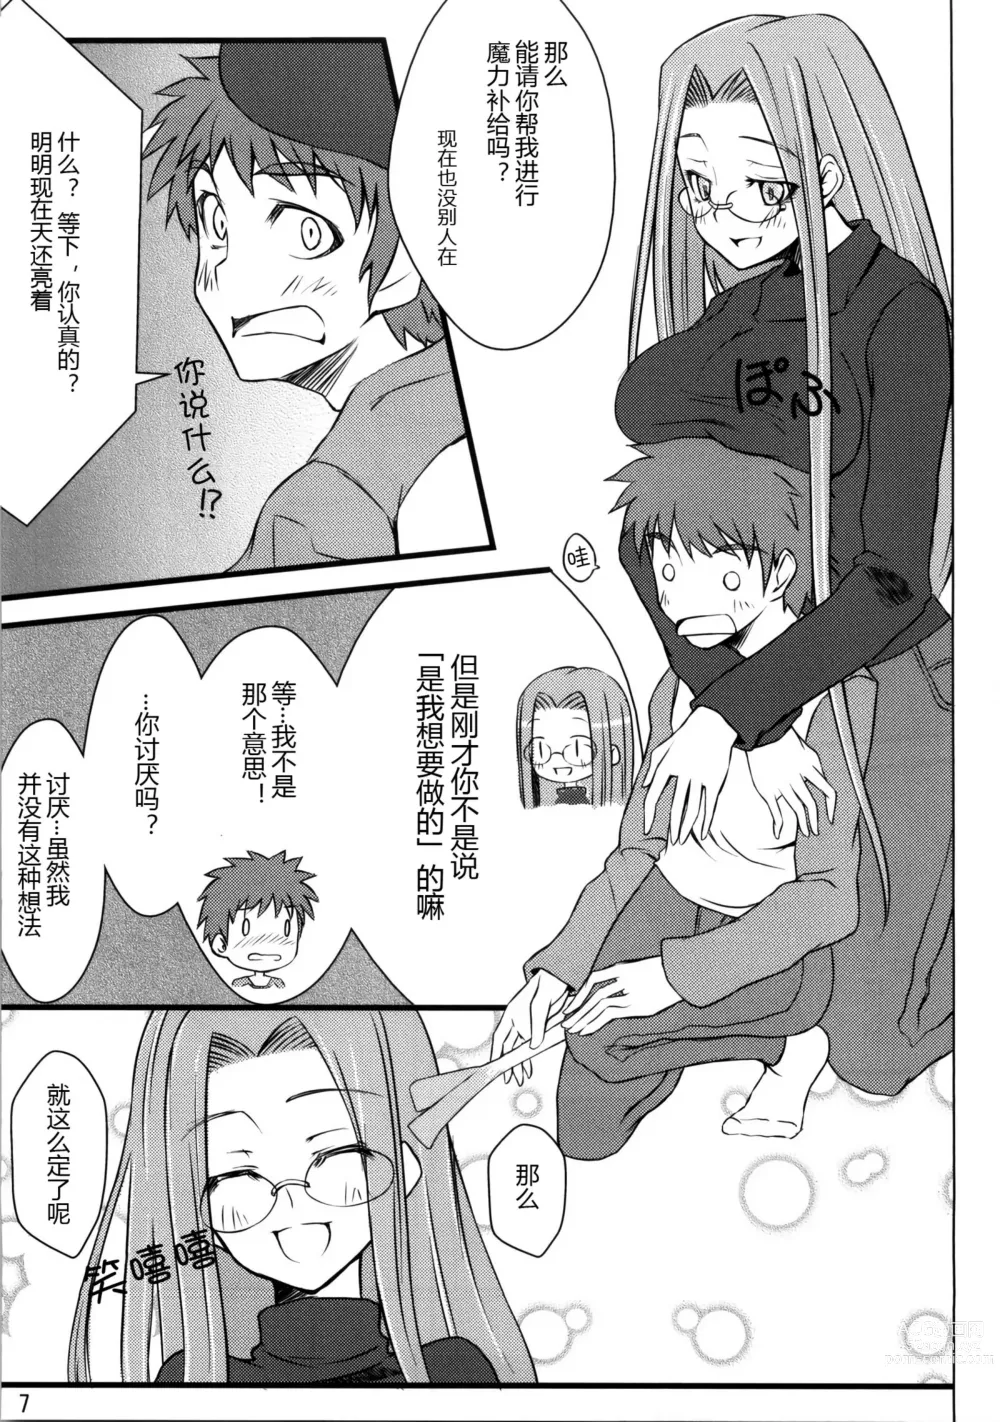 Page 7 of doujinshi R3